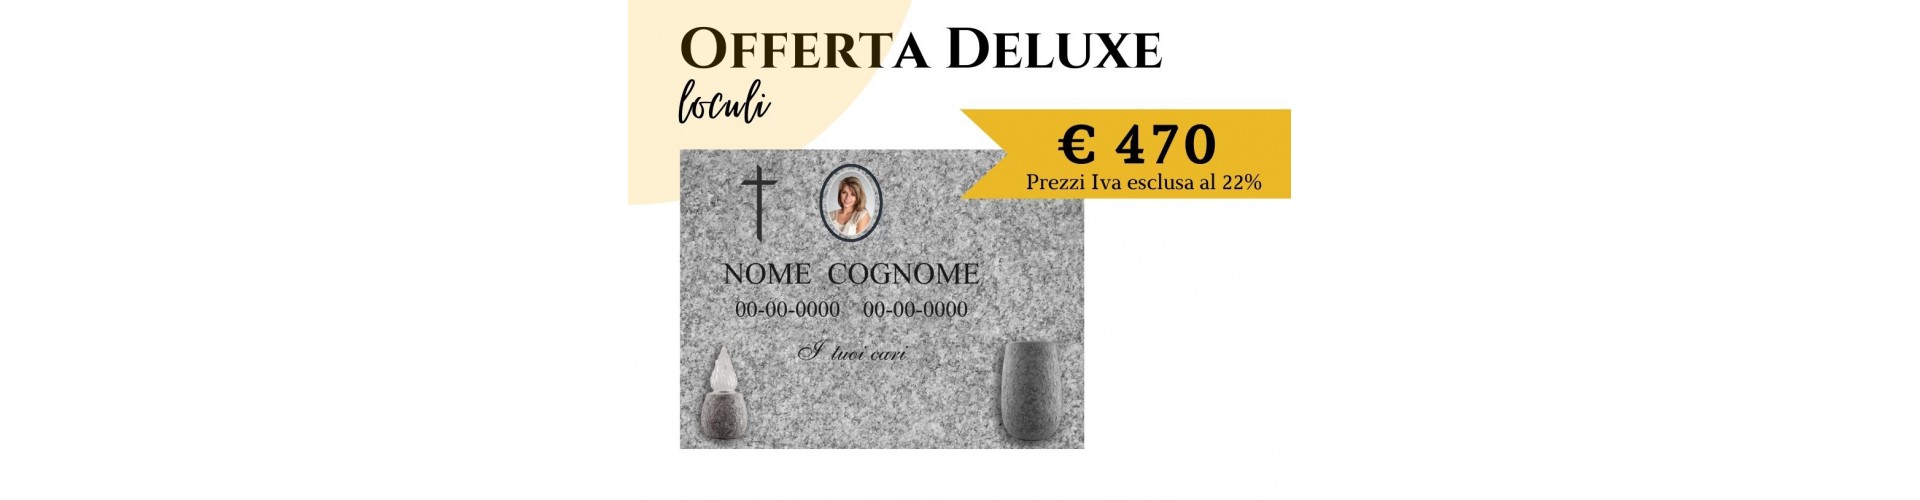 new! offerta deluxe